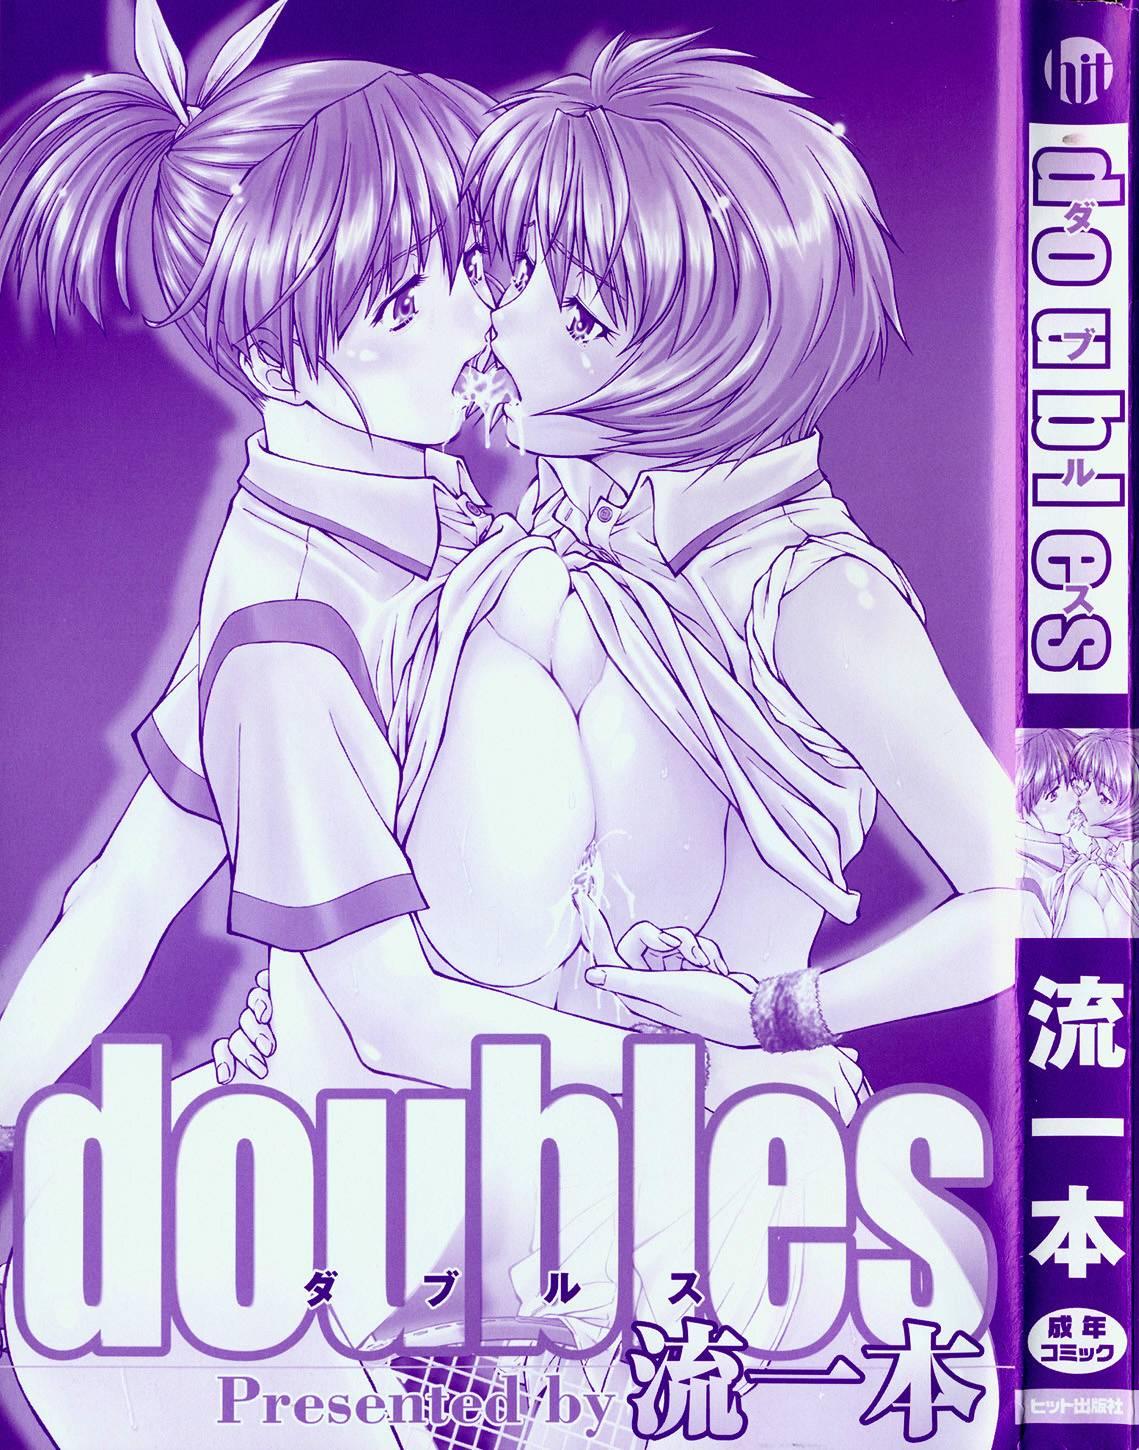 Doubles 2